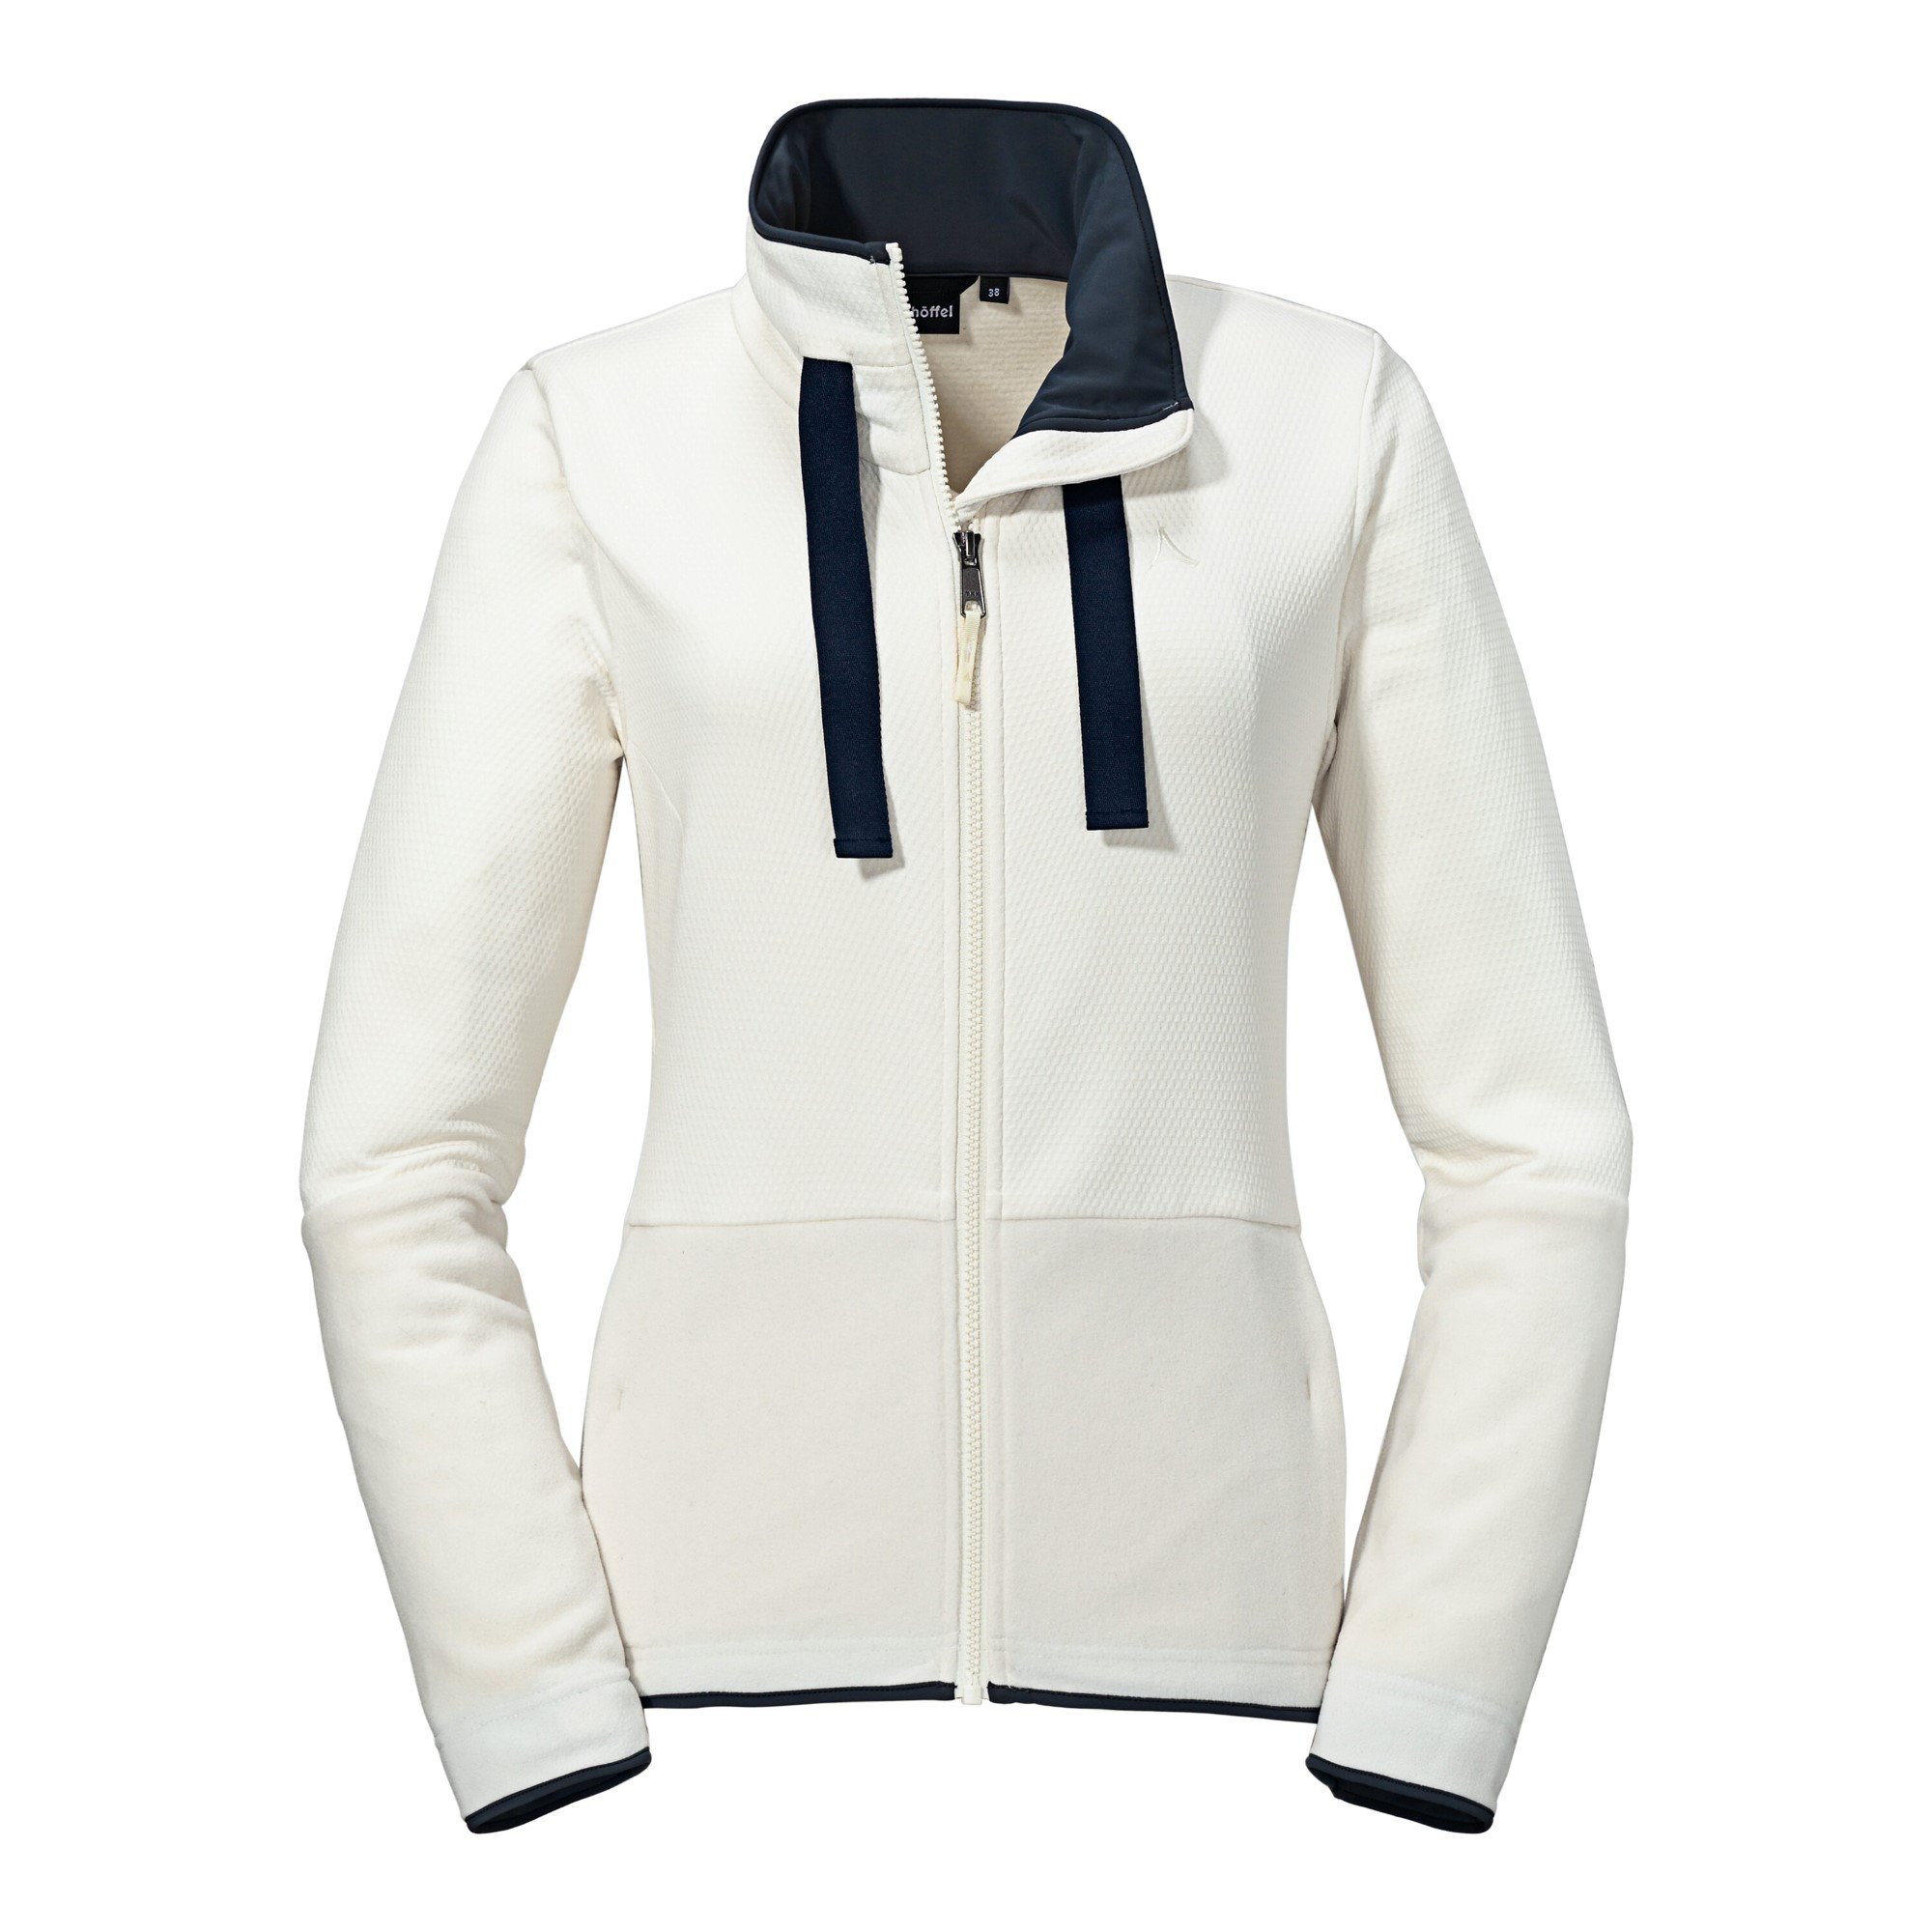 SCHÖFFEL Fleece Jacket Pelham L DAMEN whisper white (13319_1140), 60,00 €